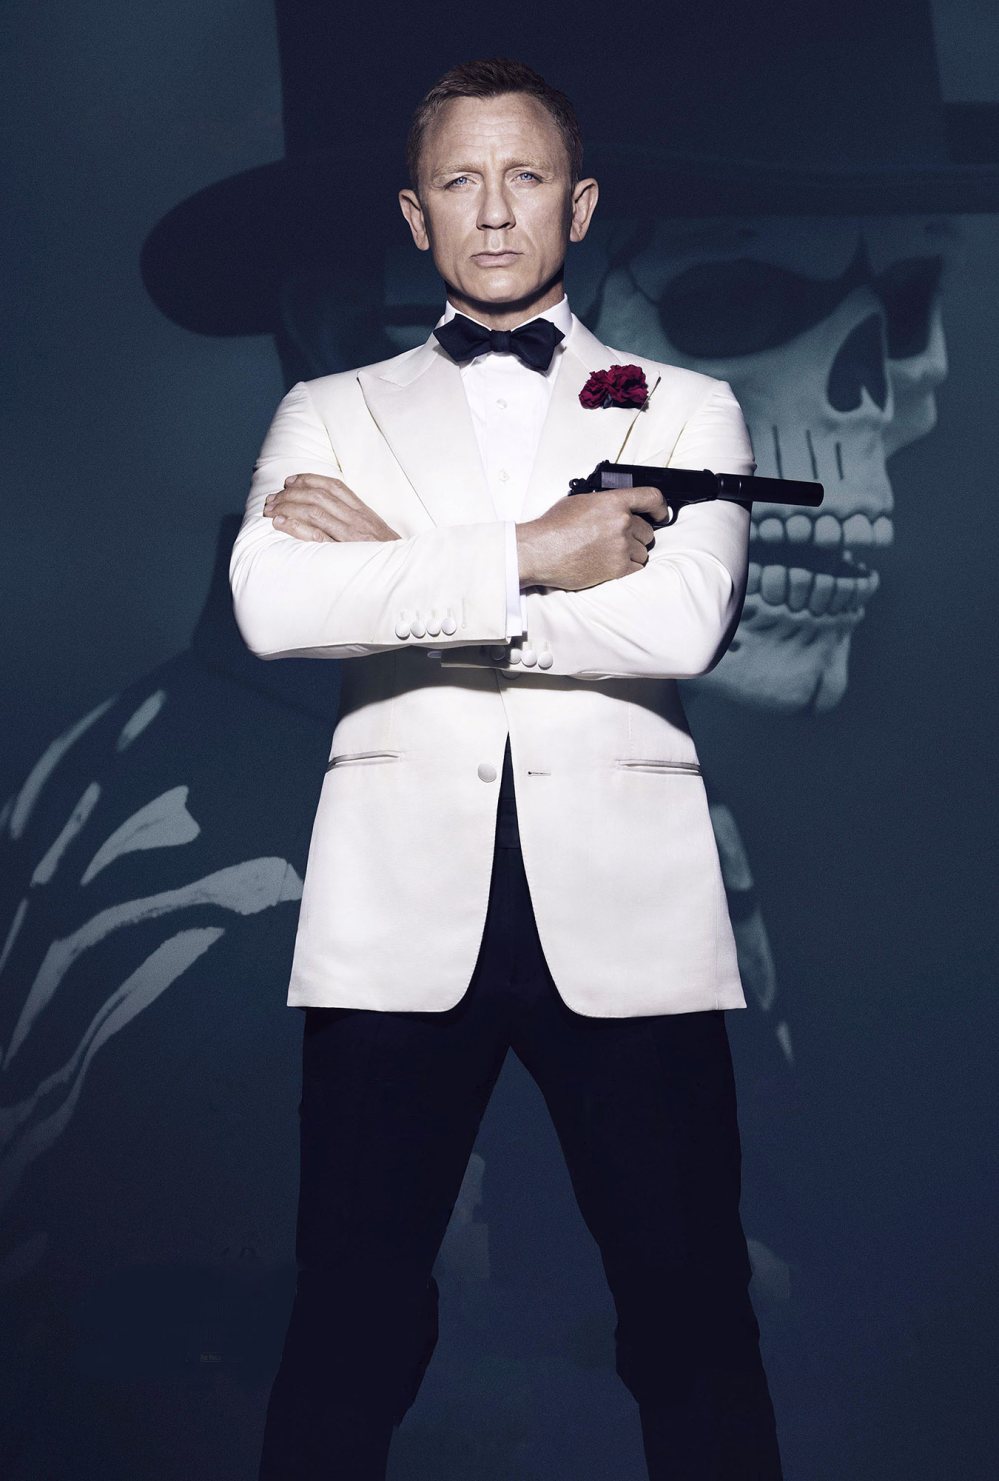 Daniel Craig Spectre James Bond